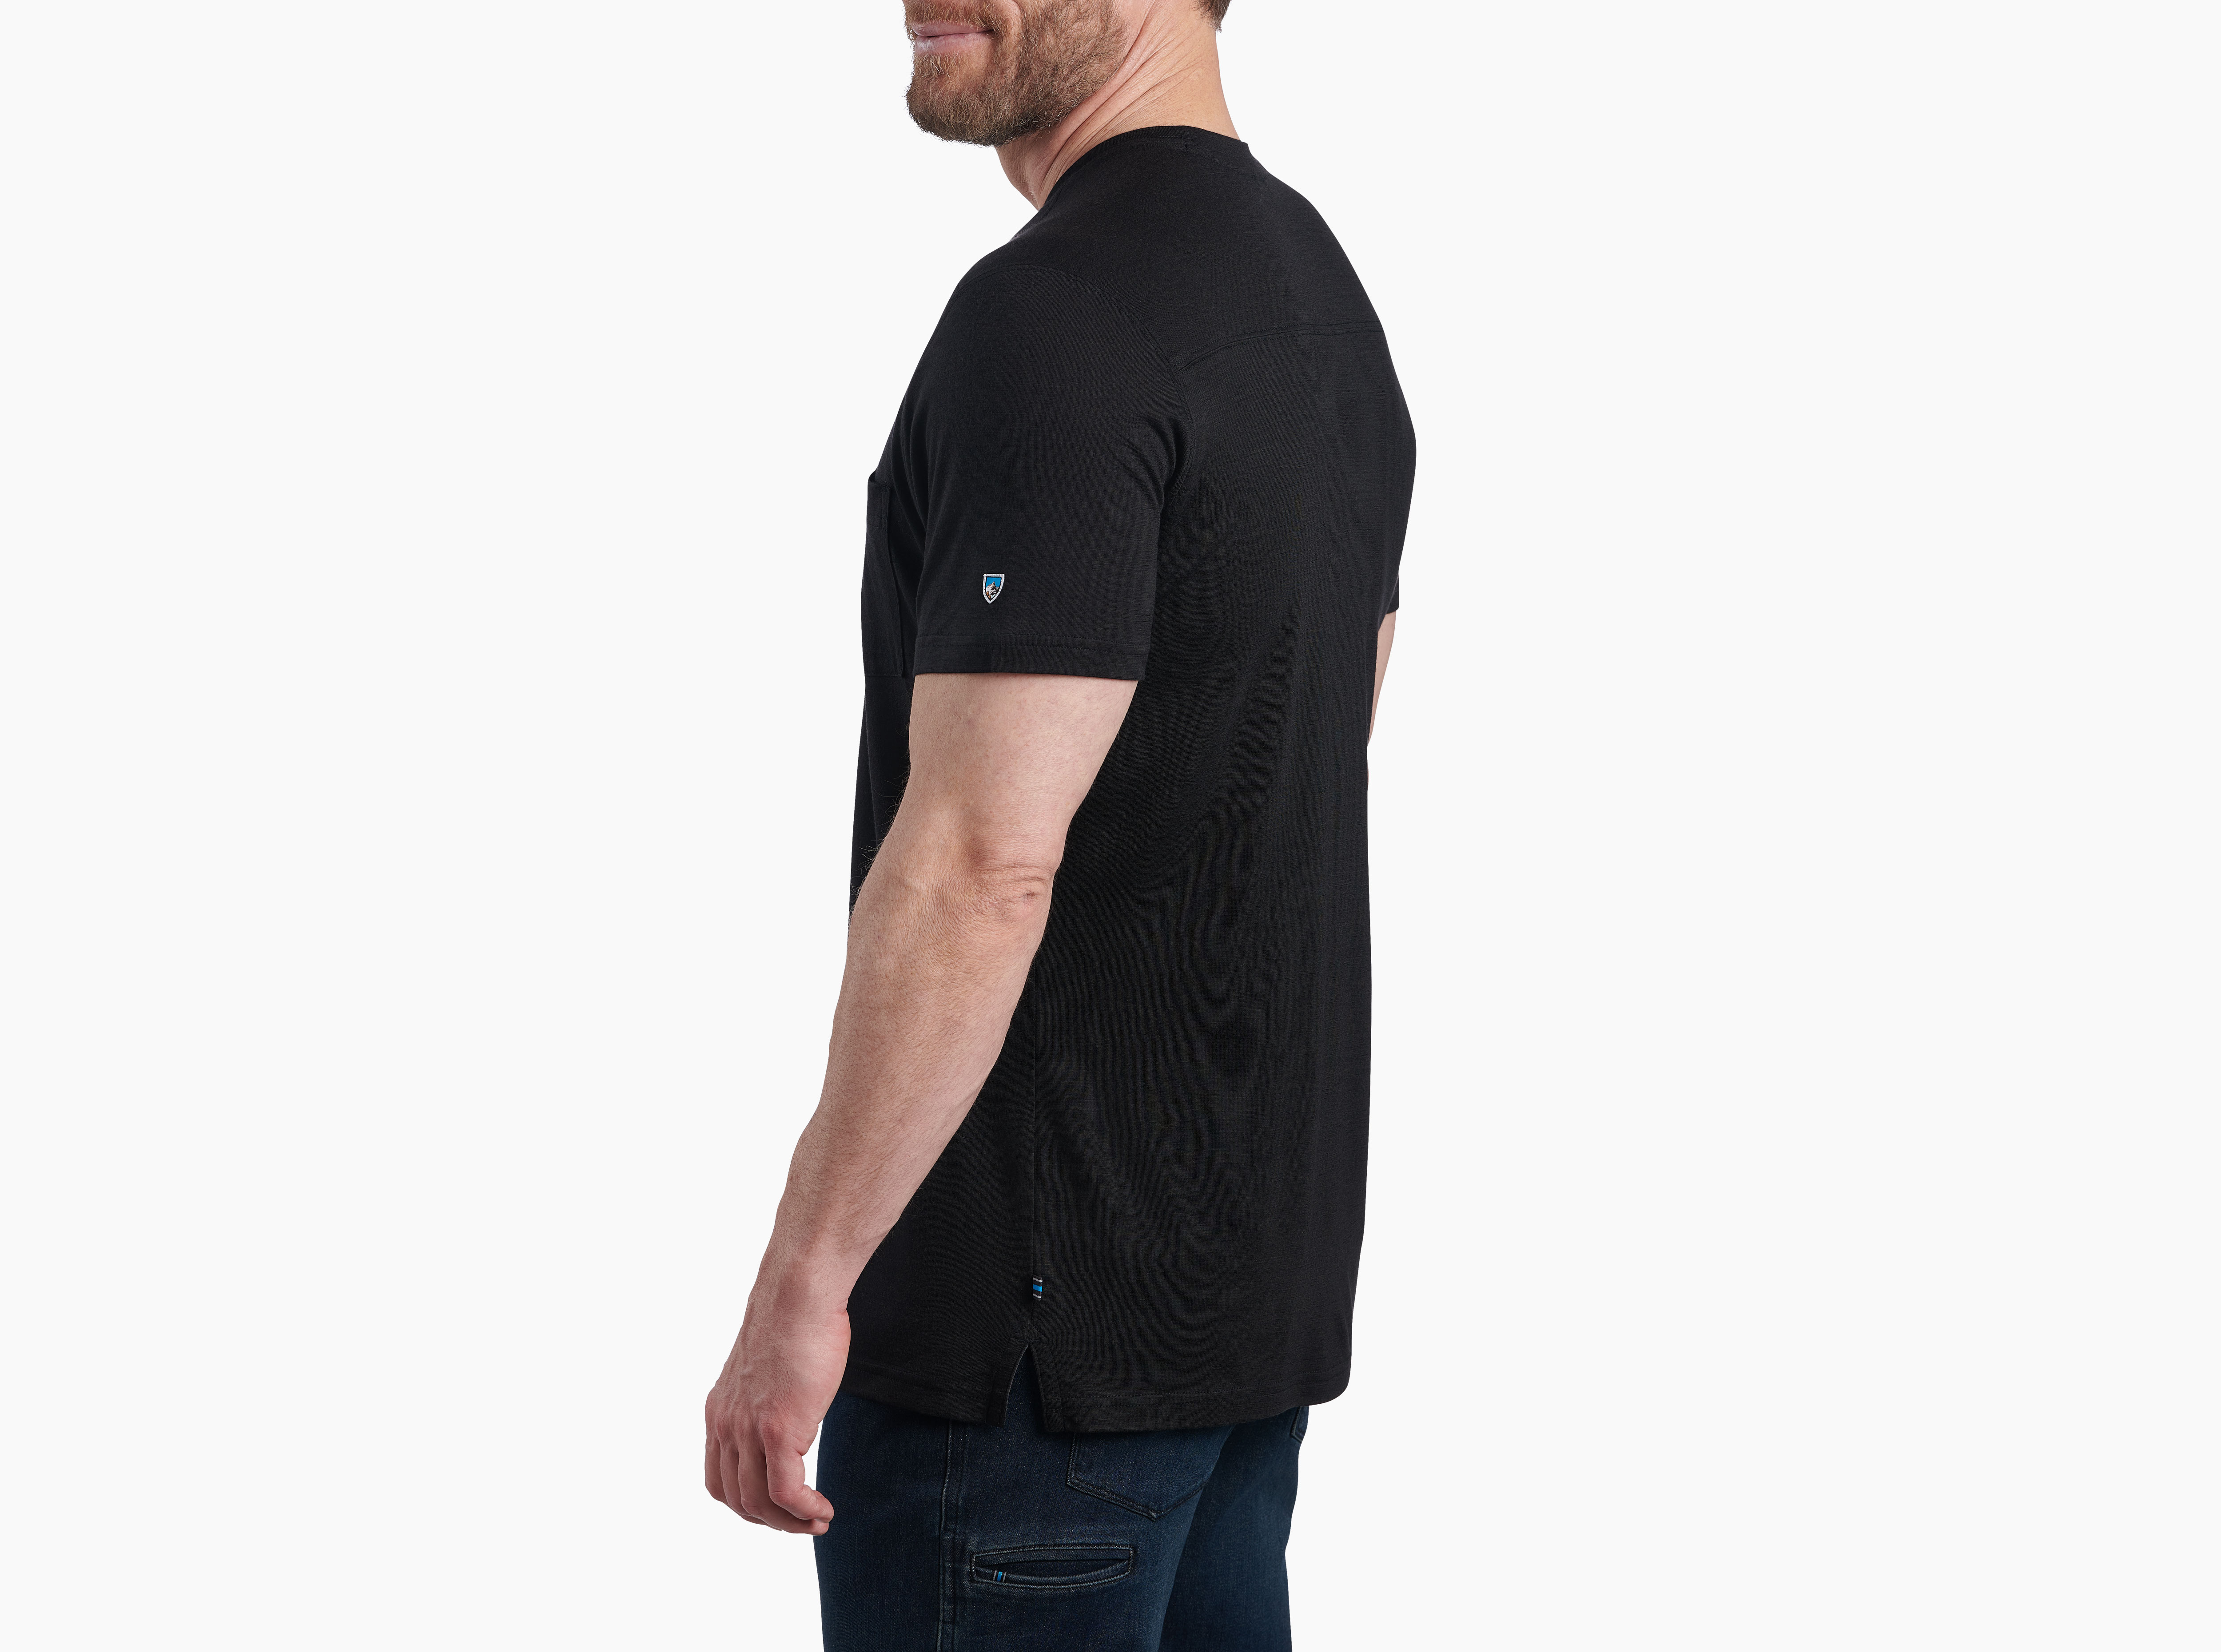 Kuhl Klimitzer Shirt Review - Super Comfortable Casual Shirt